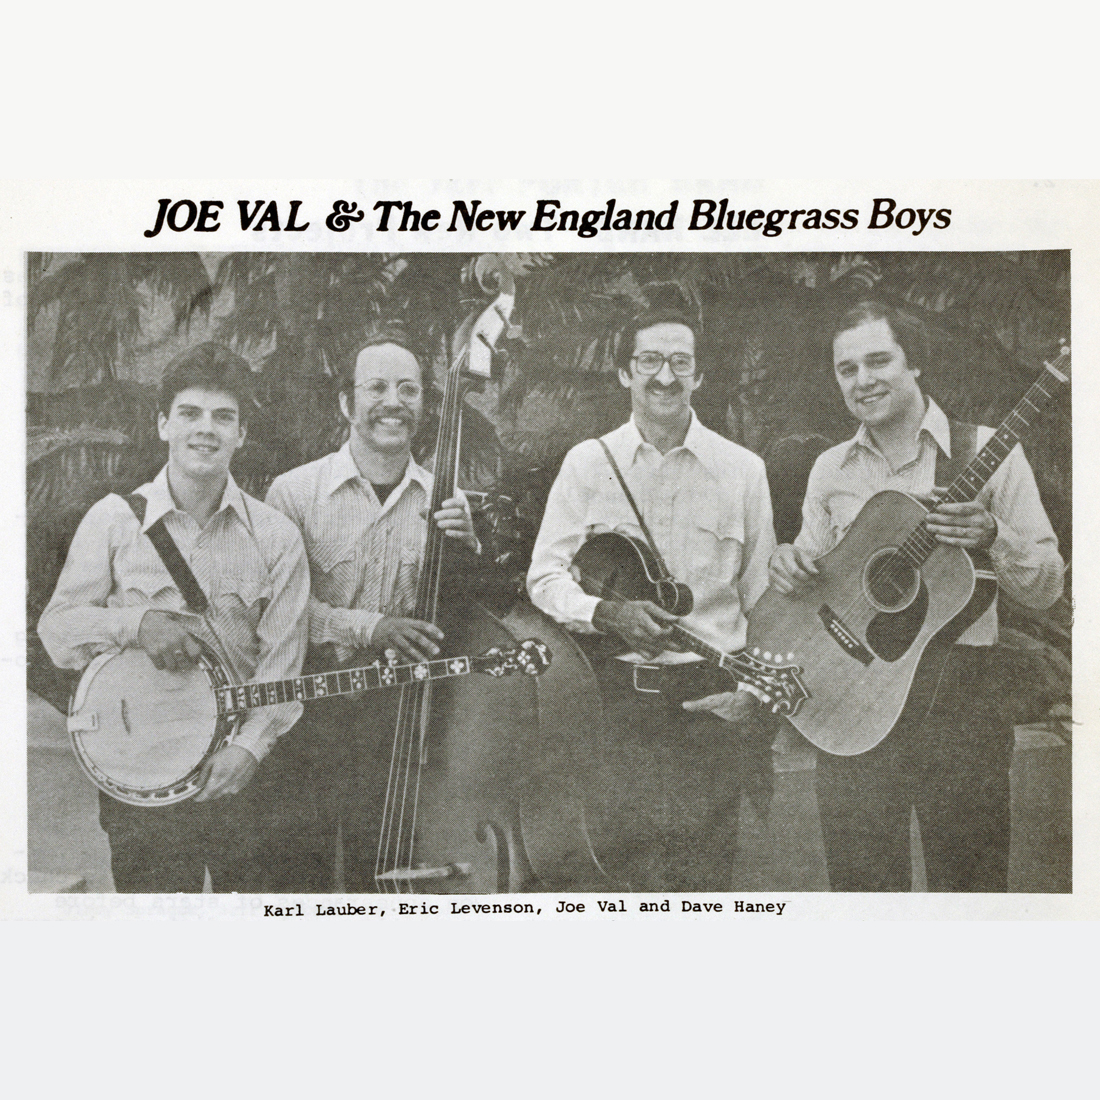 Joe Val & The New England Bluegrass Boys